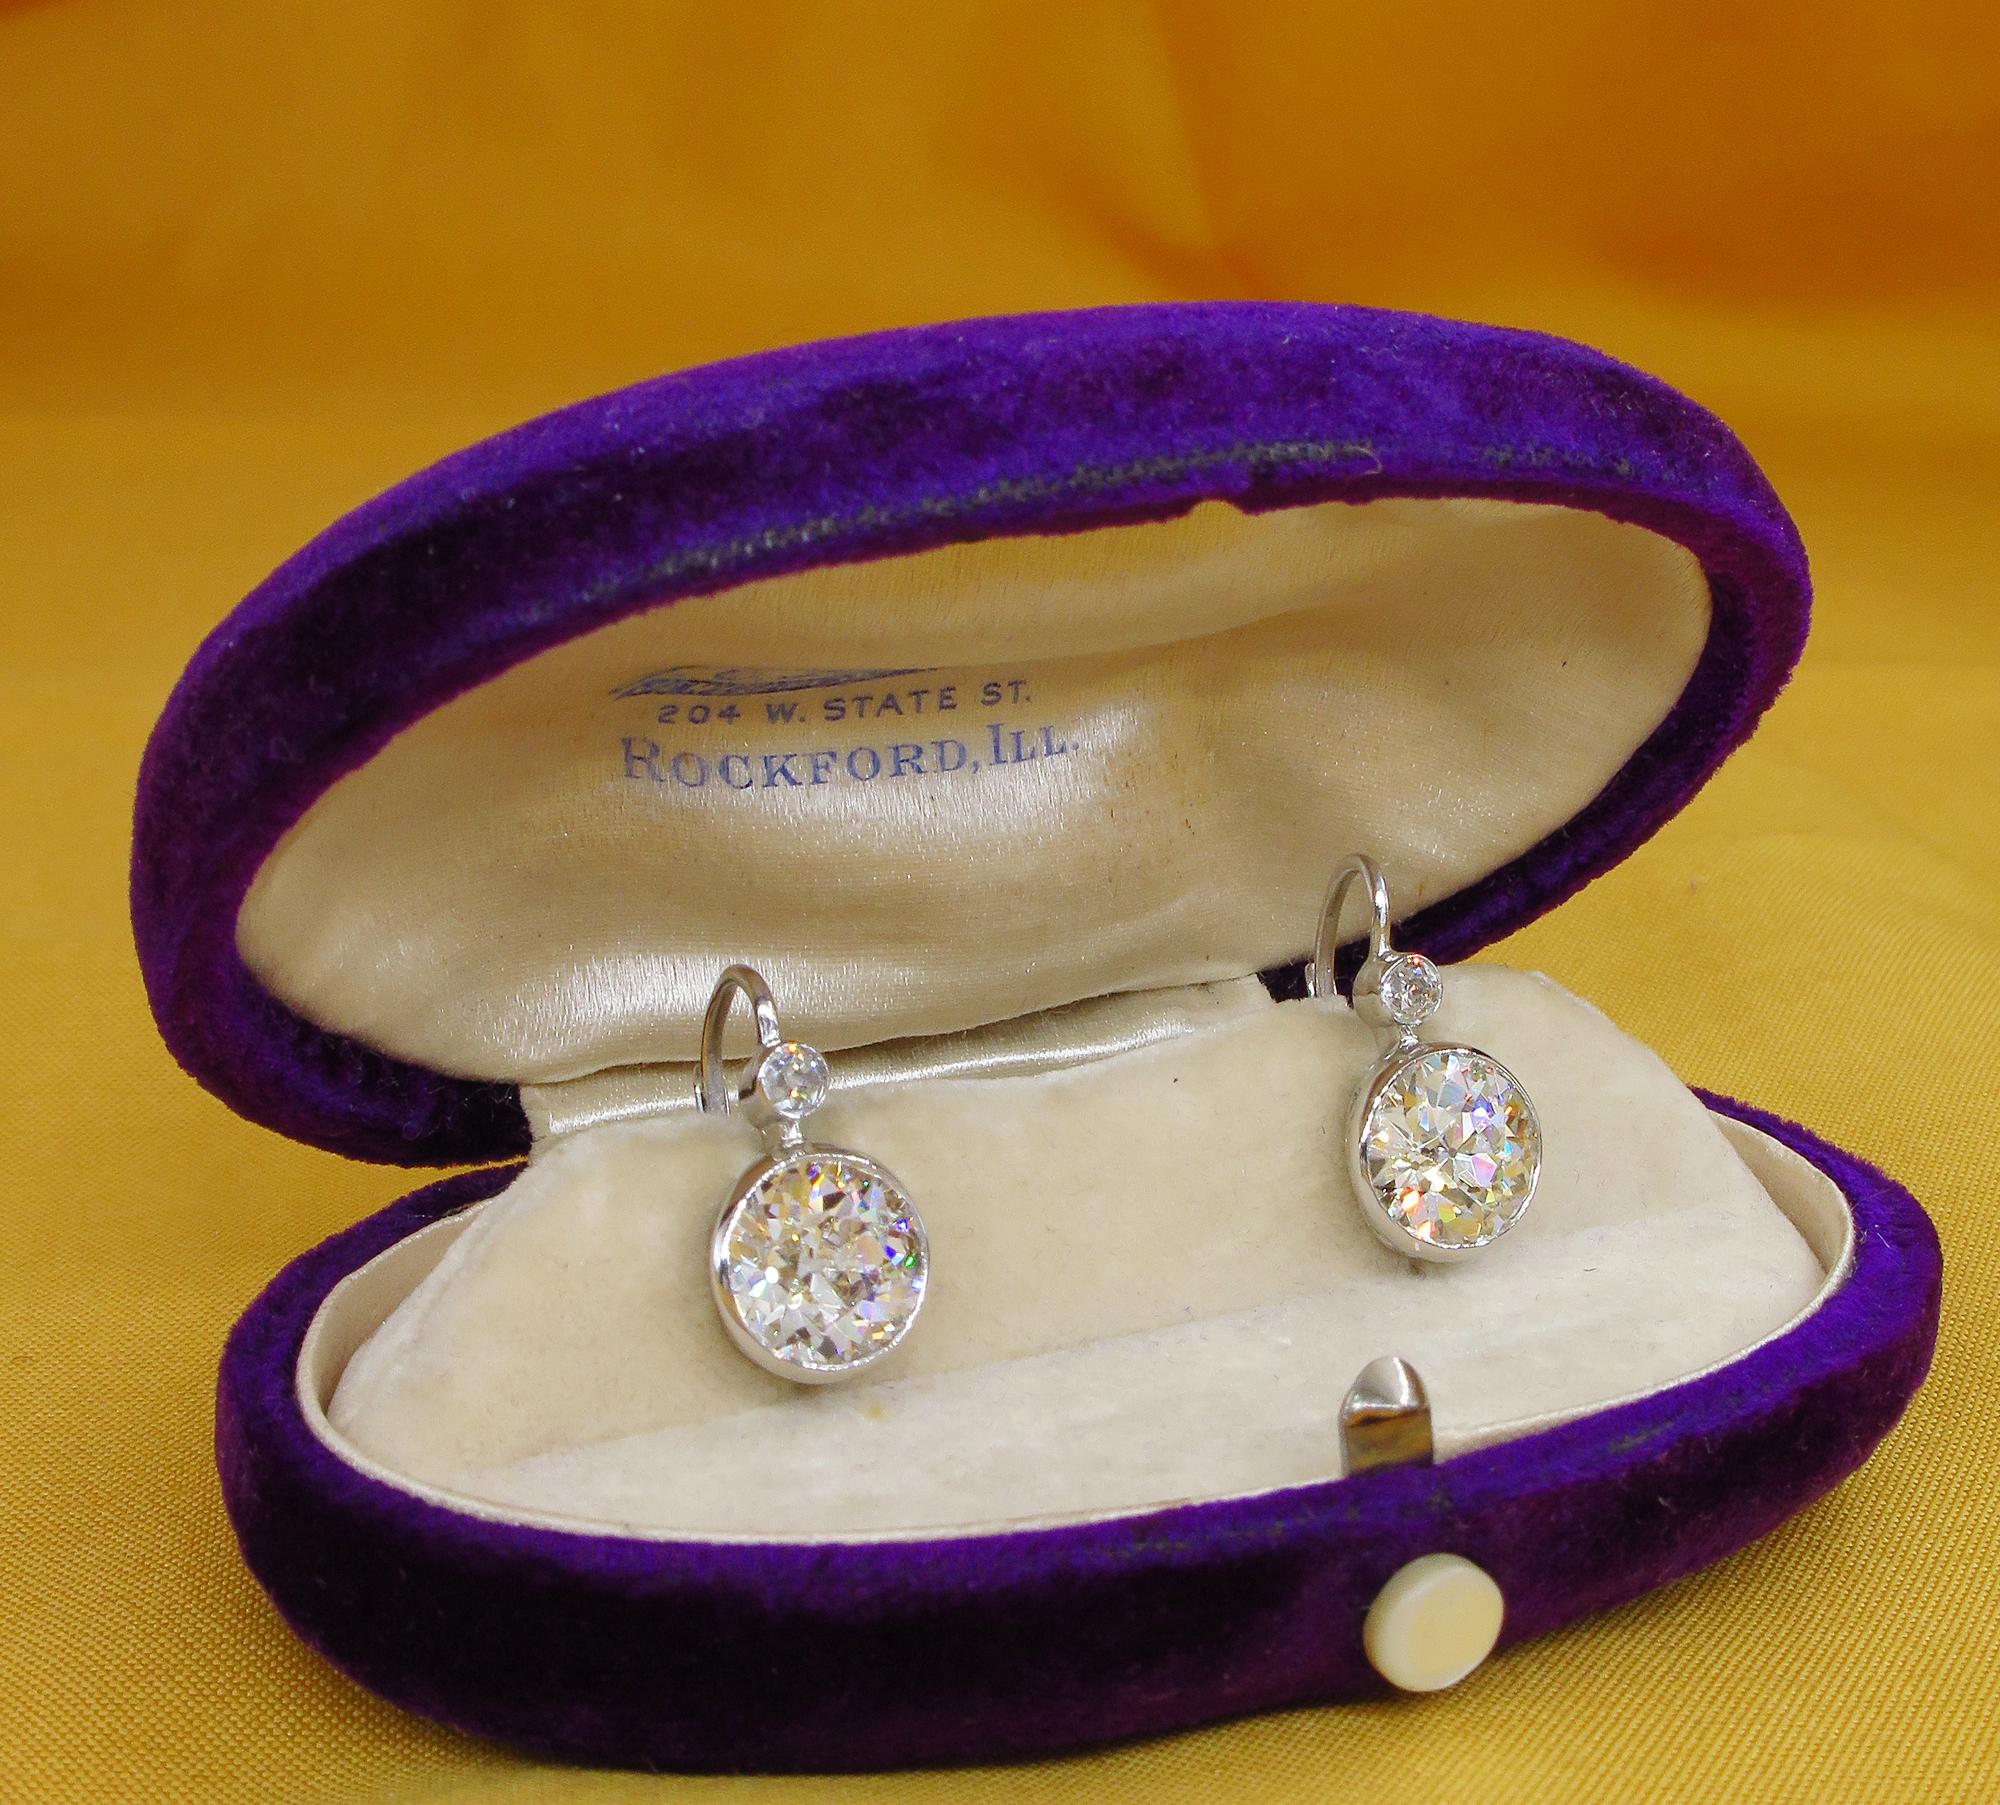 Women's Art Deco 4.45 Carat Old European Cut Diamond Drop Hanging Earrings in Platinum